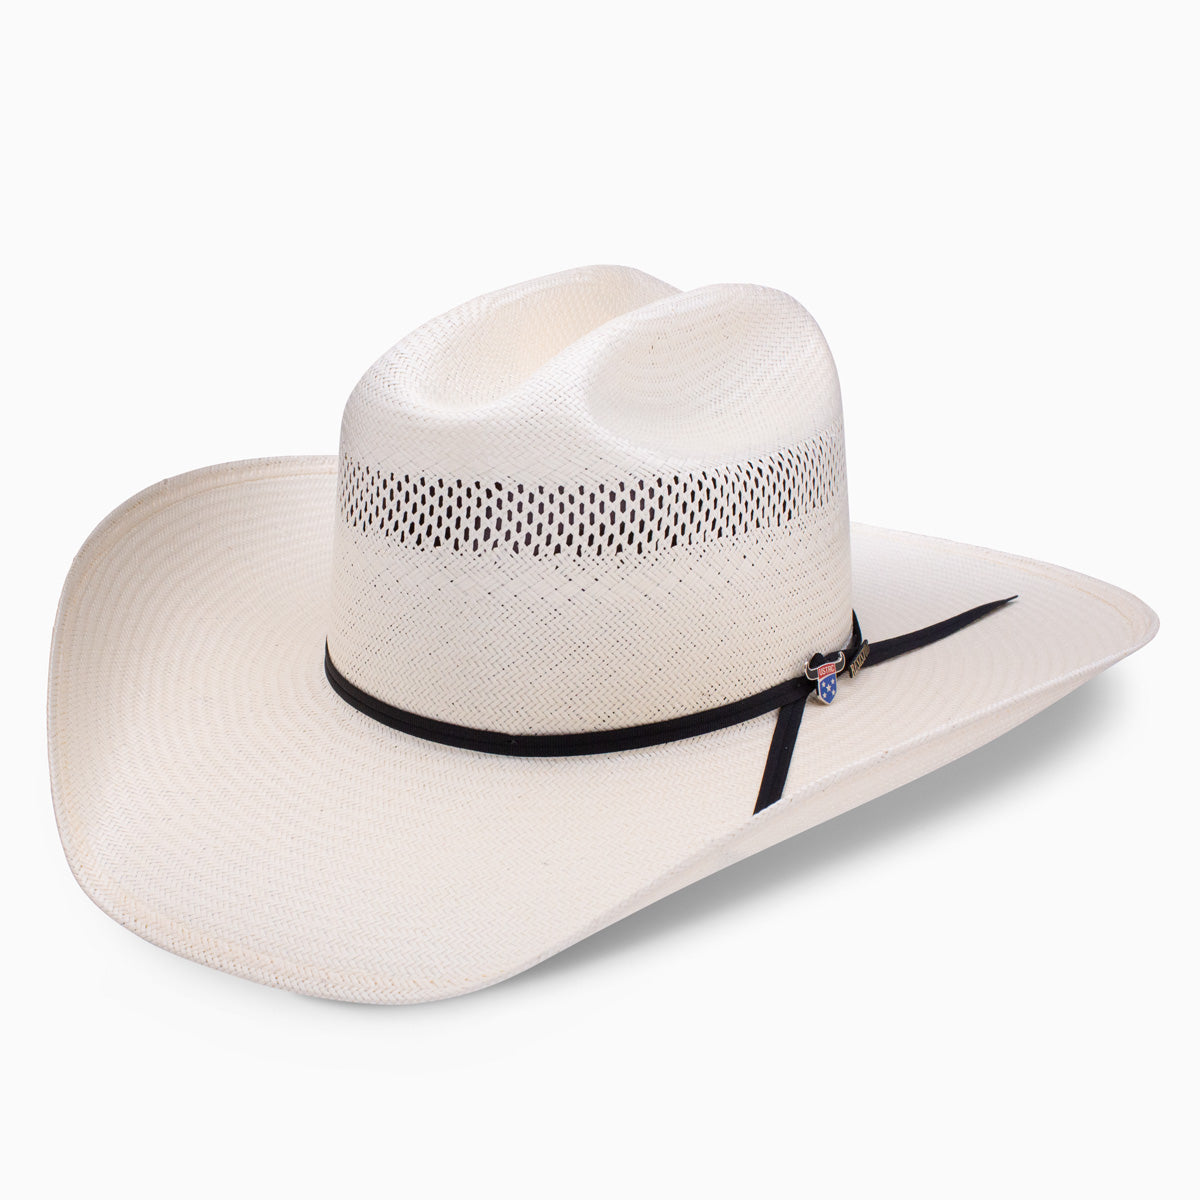 Traditional Straw Cowboy Hat